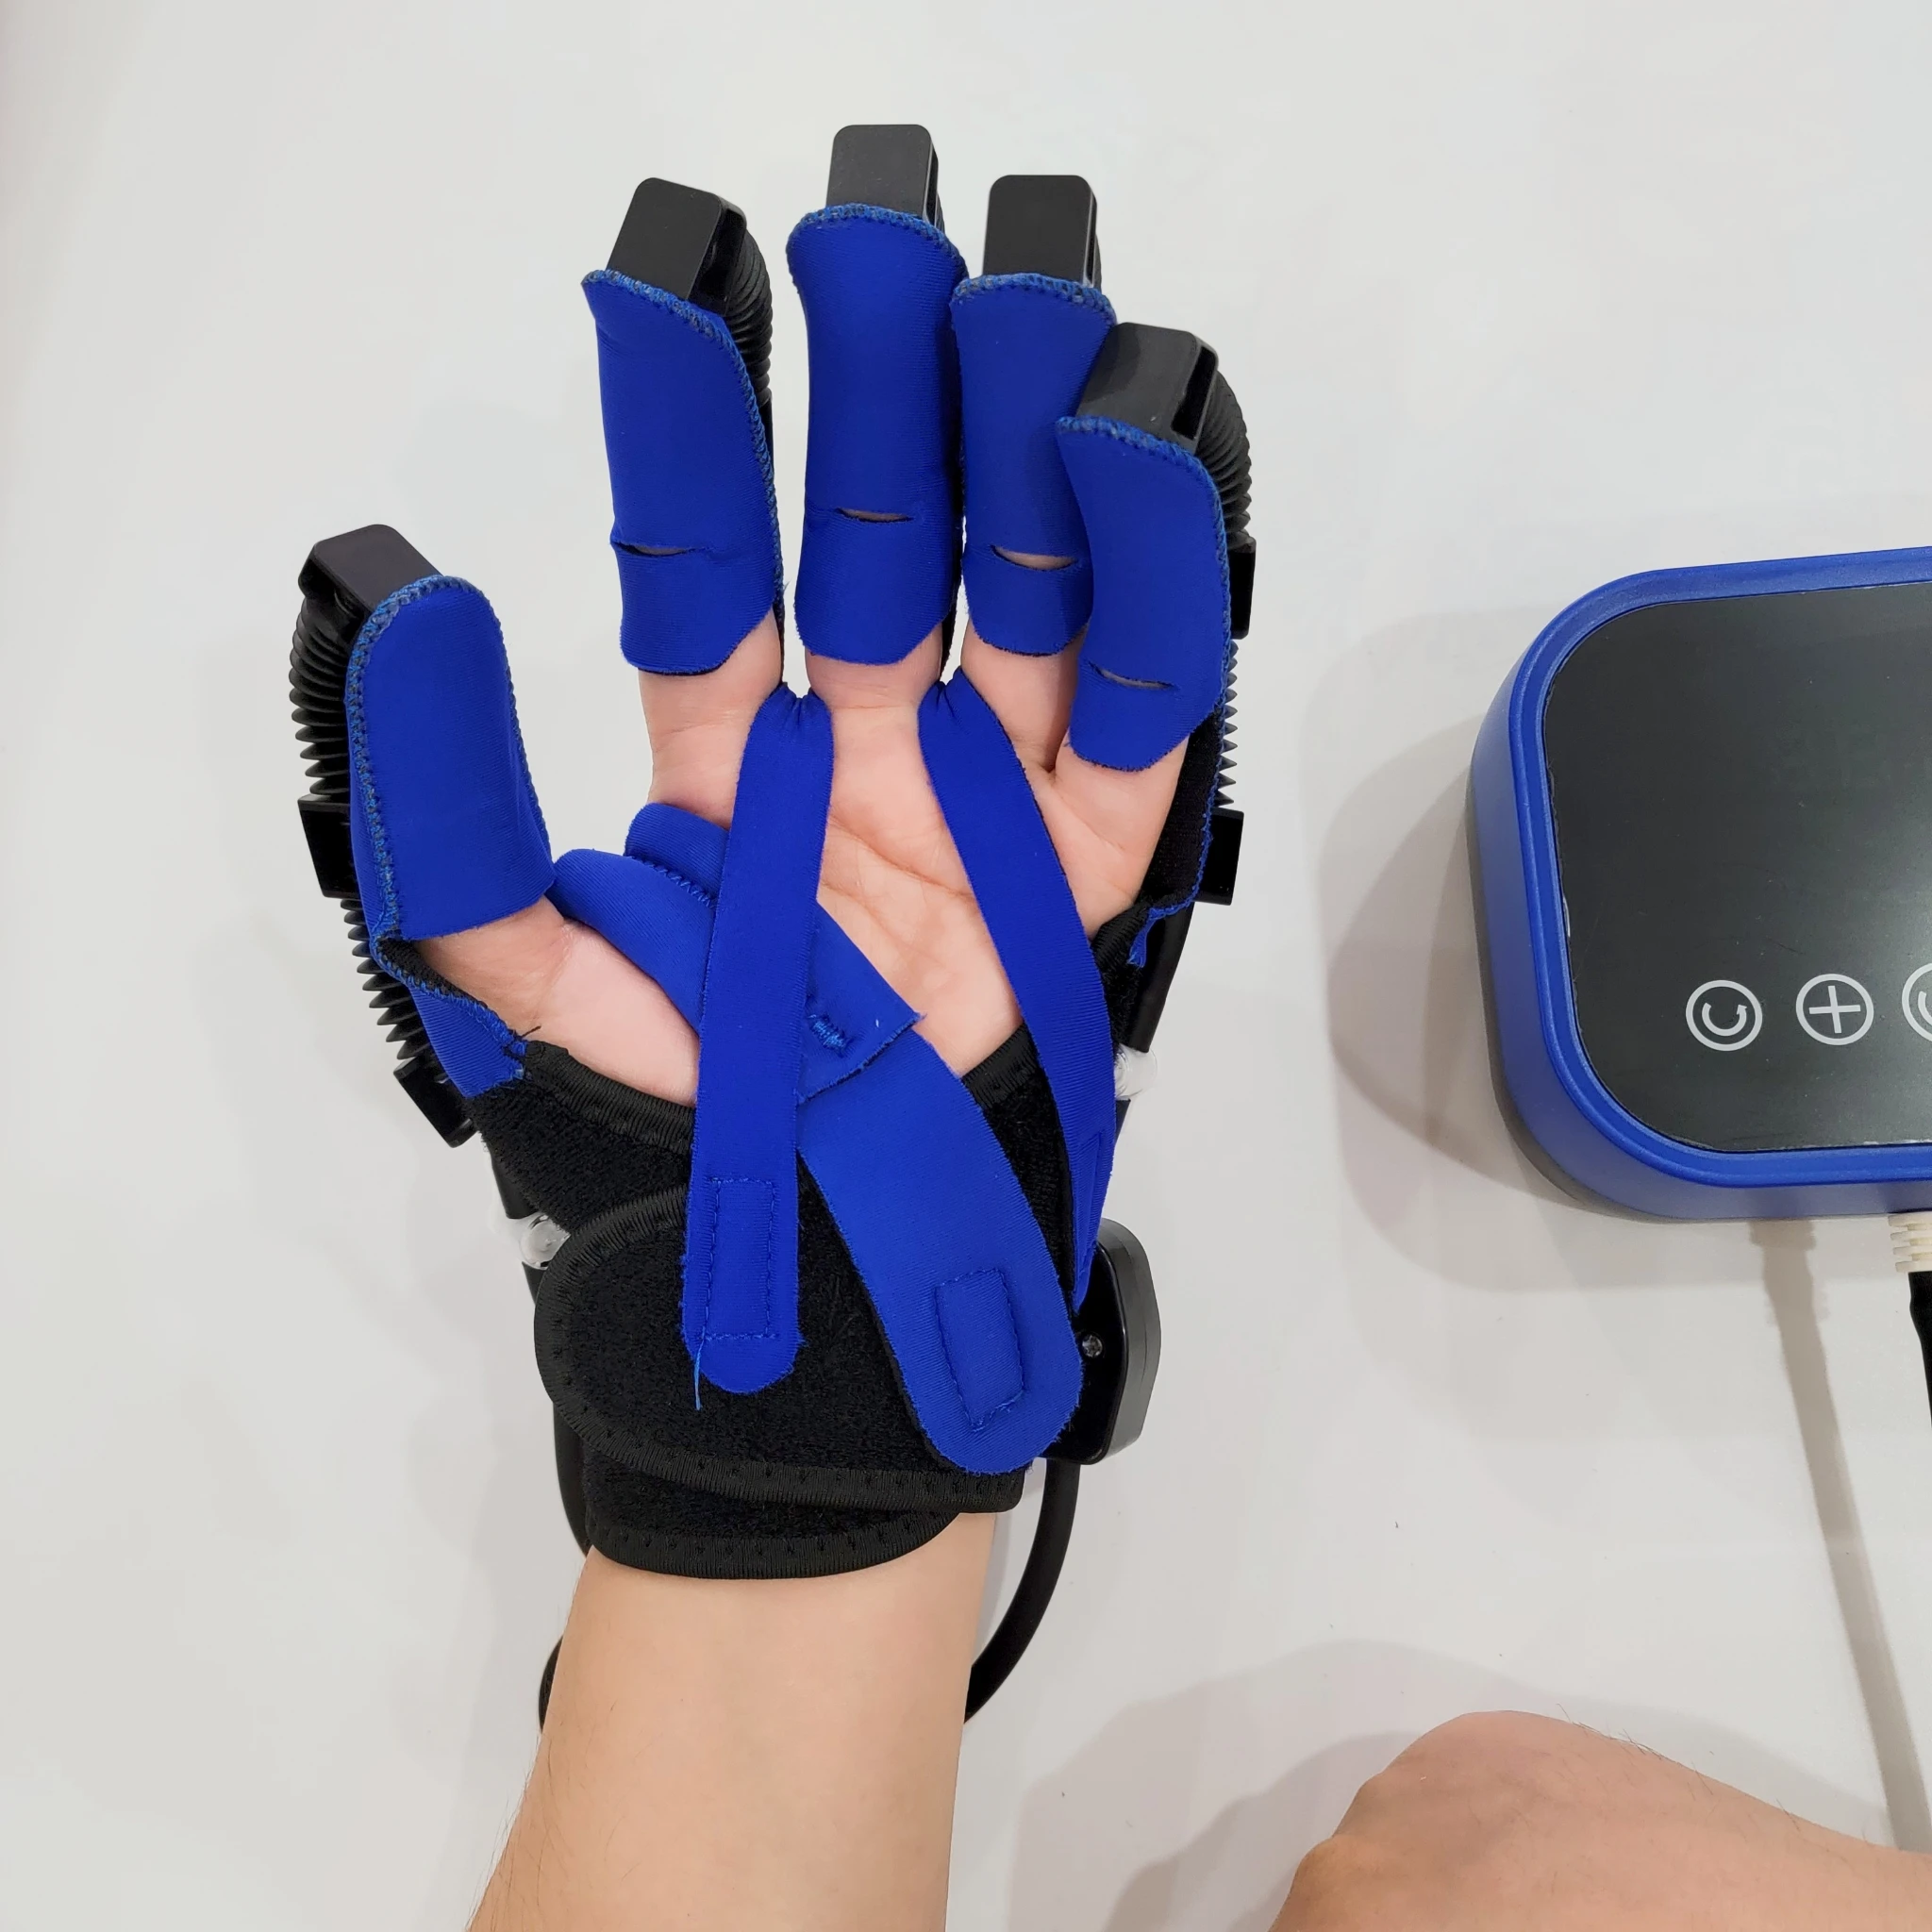 Robot Glove